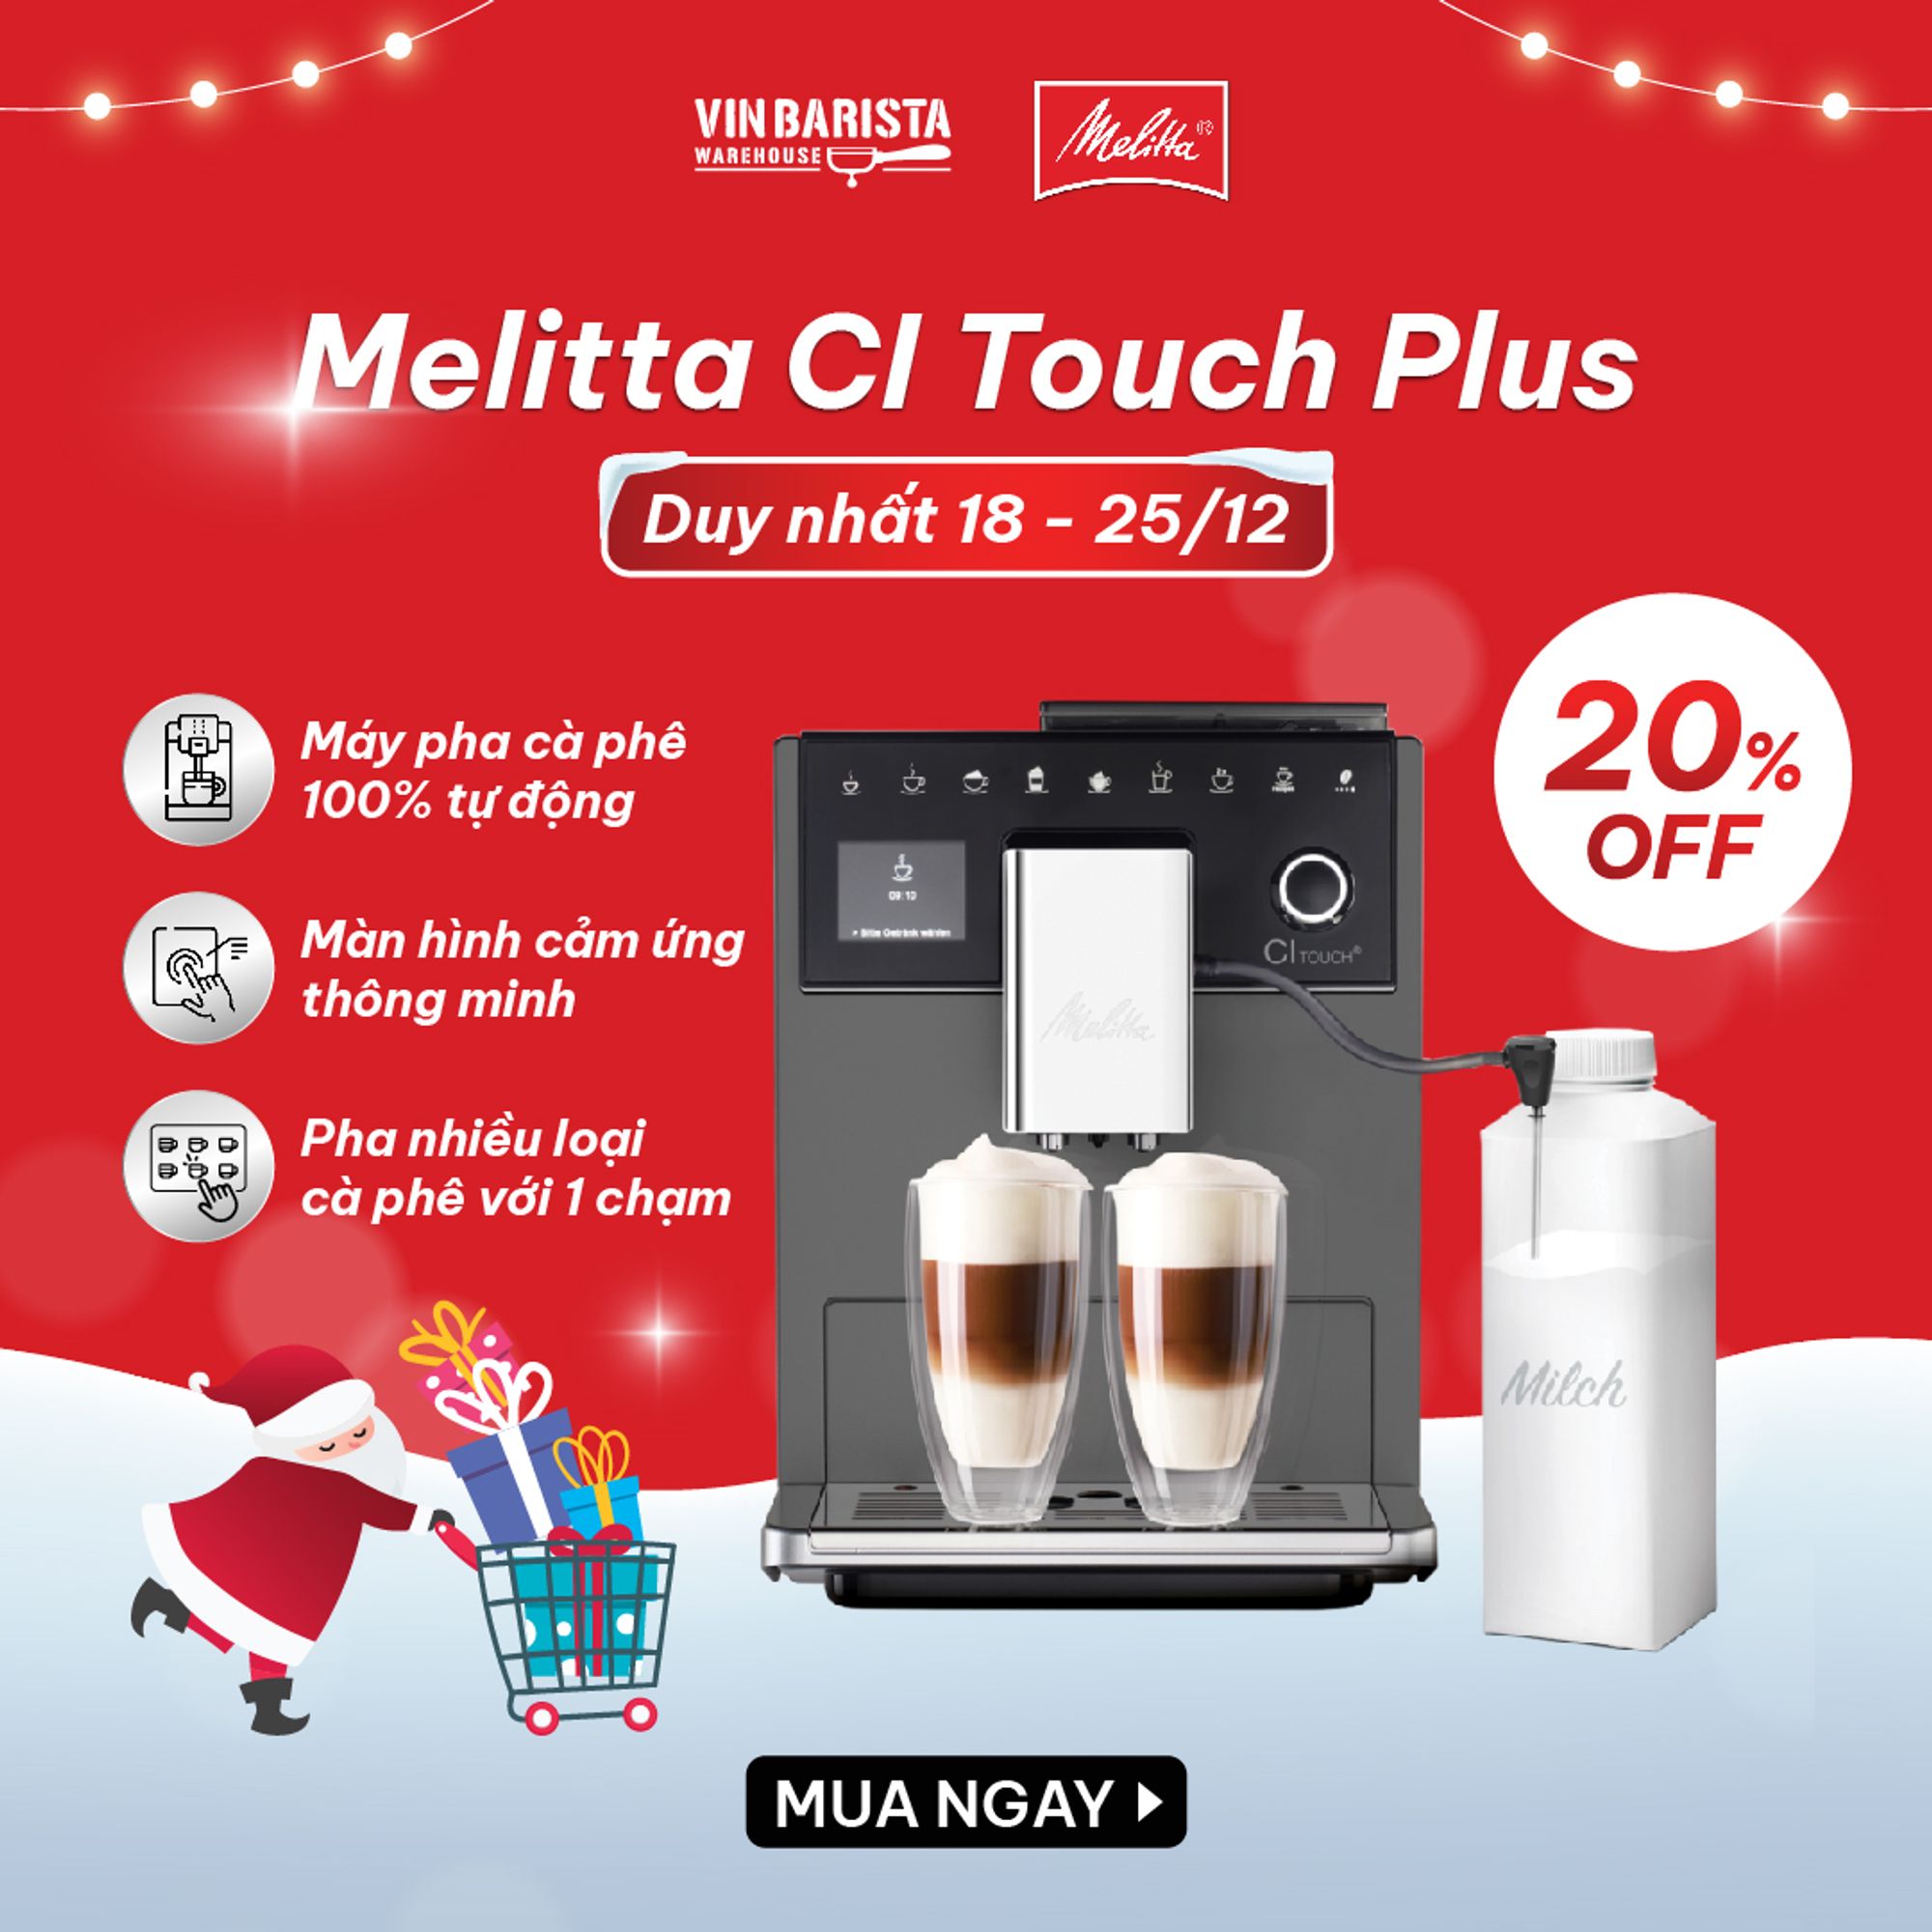 Melitta CI Touch Plus Xmas sale 01